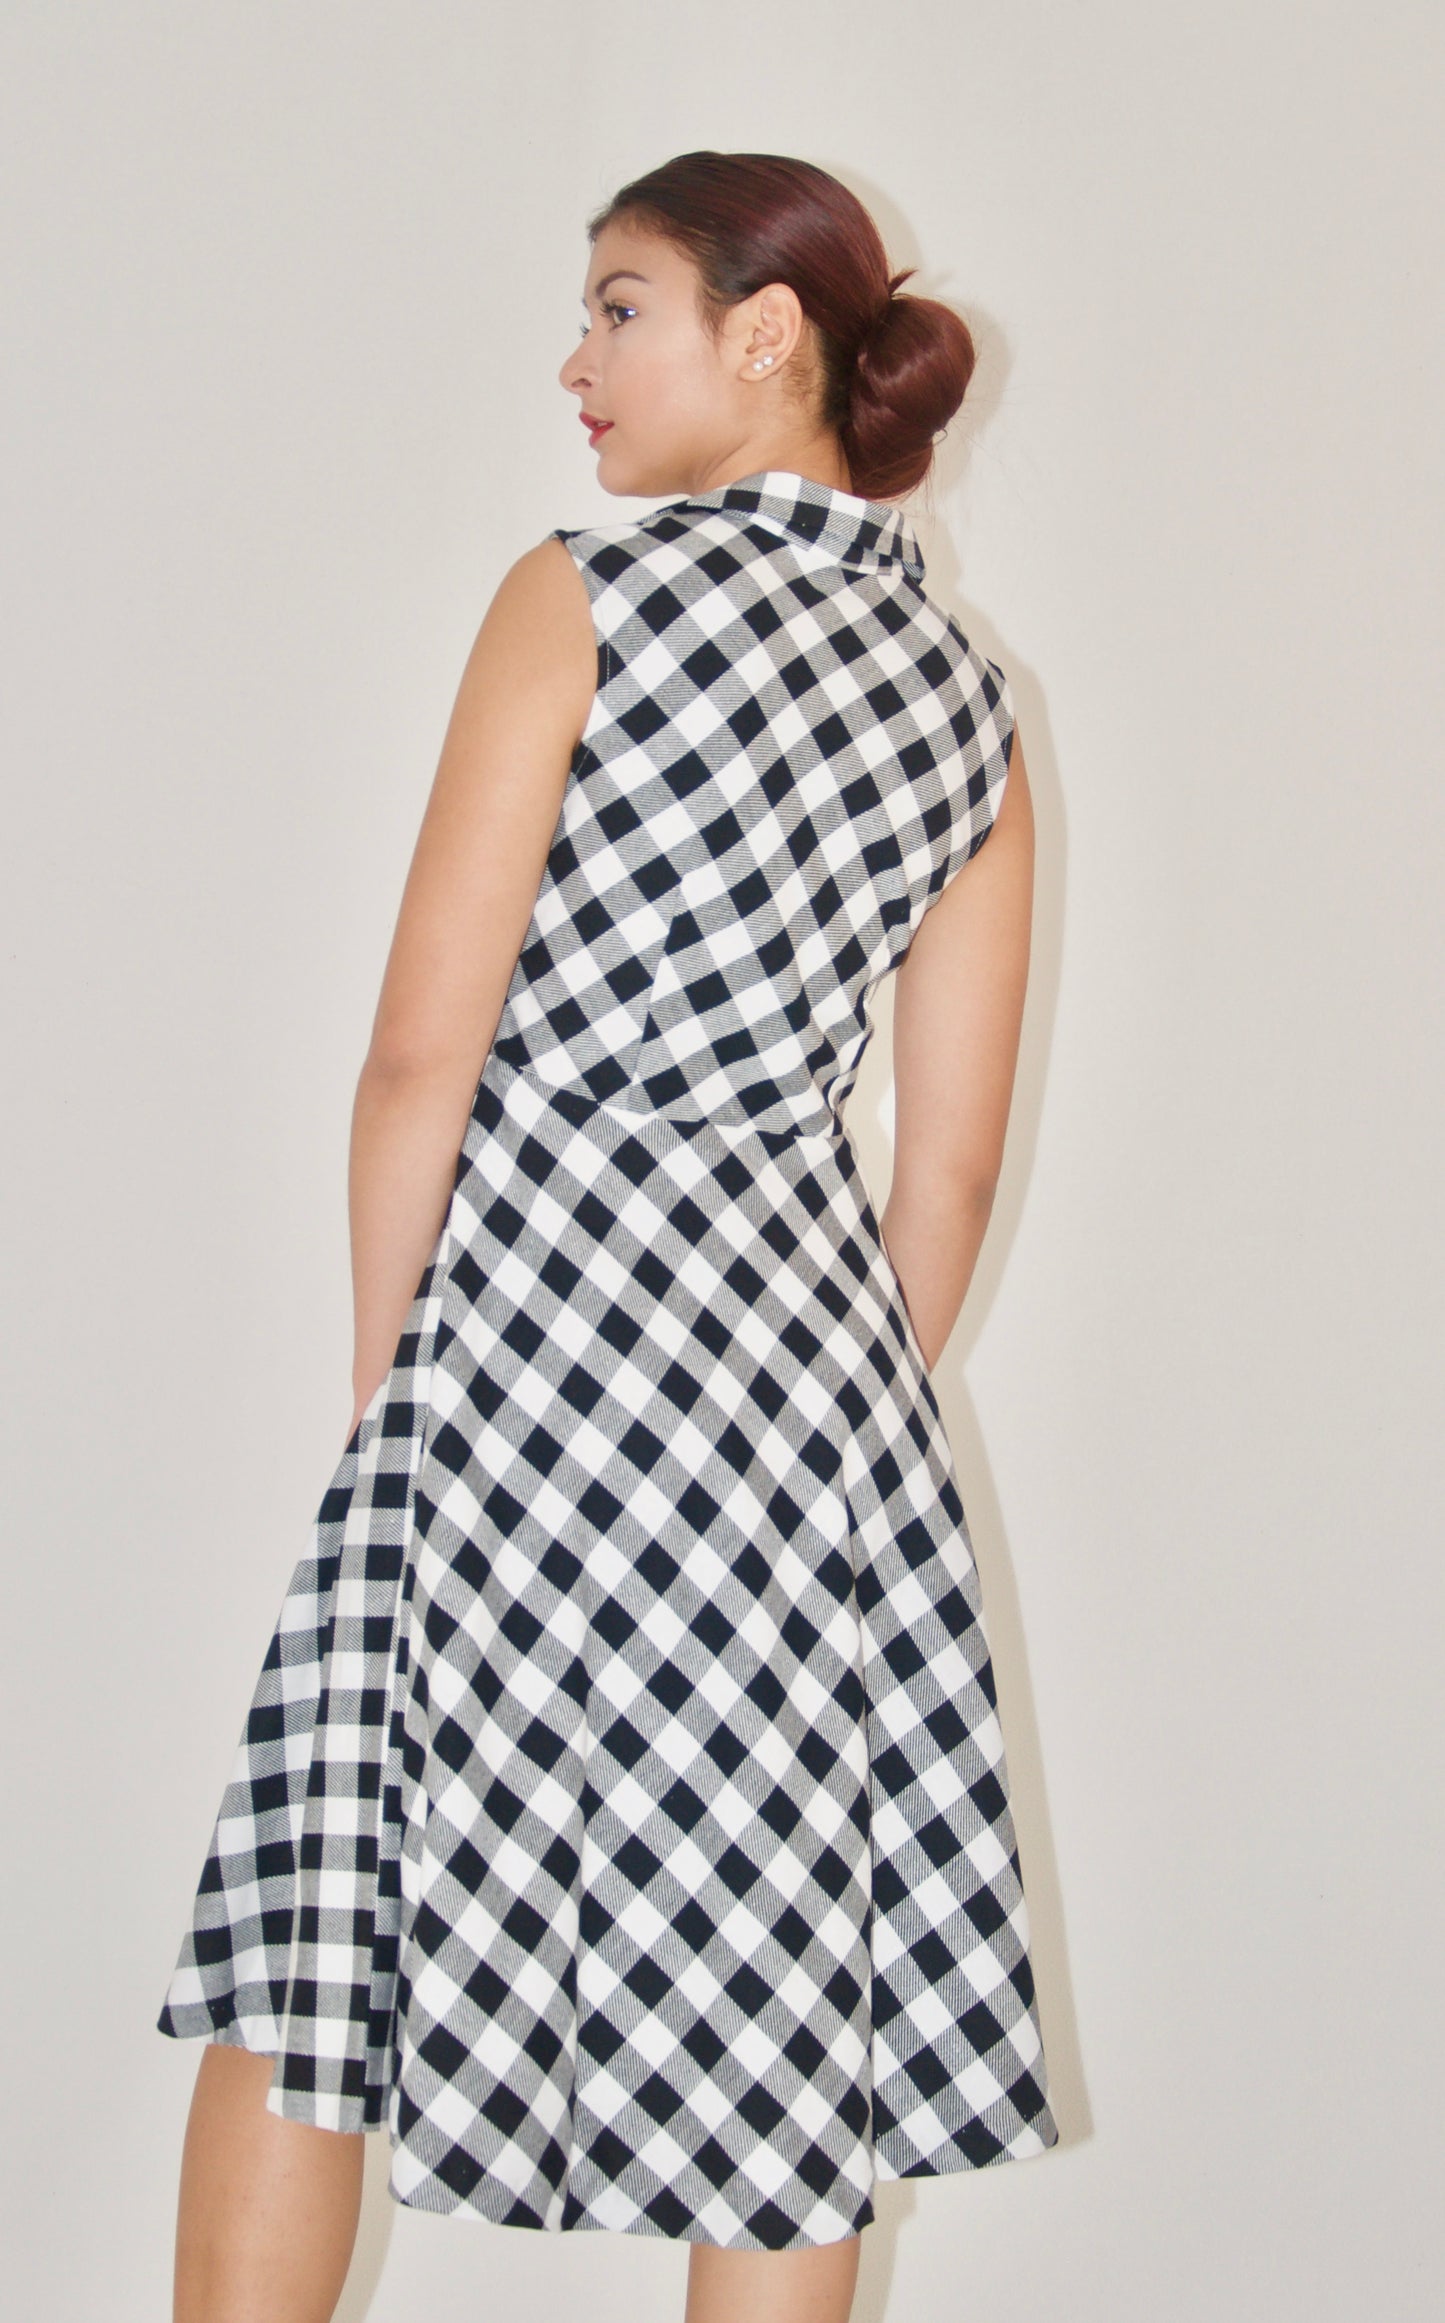 Achromatic Checkers Print Shirtwaist Dress